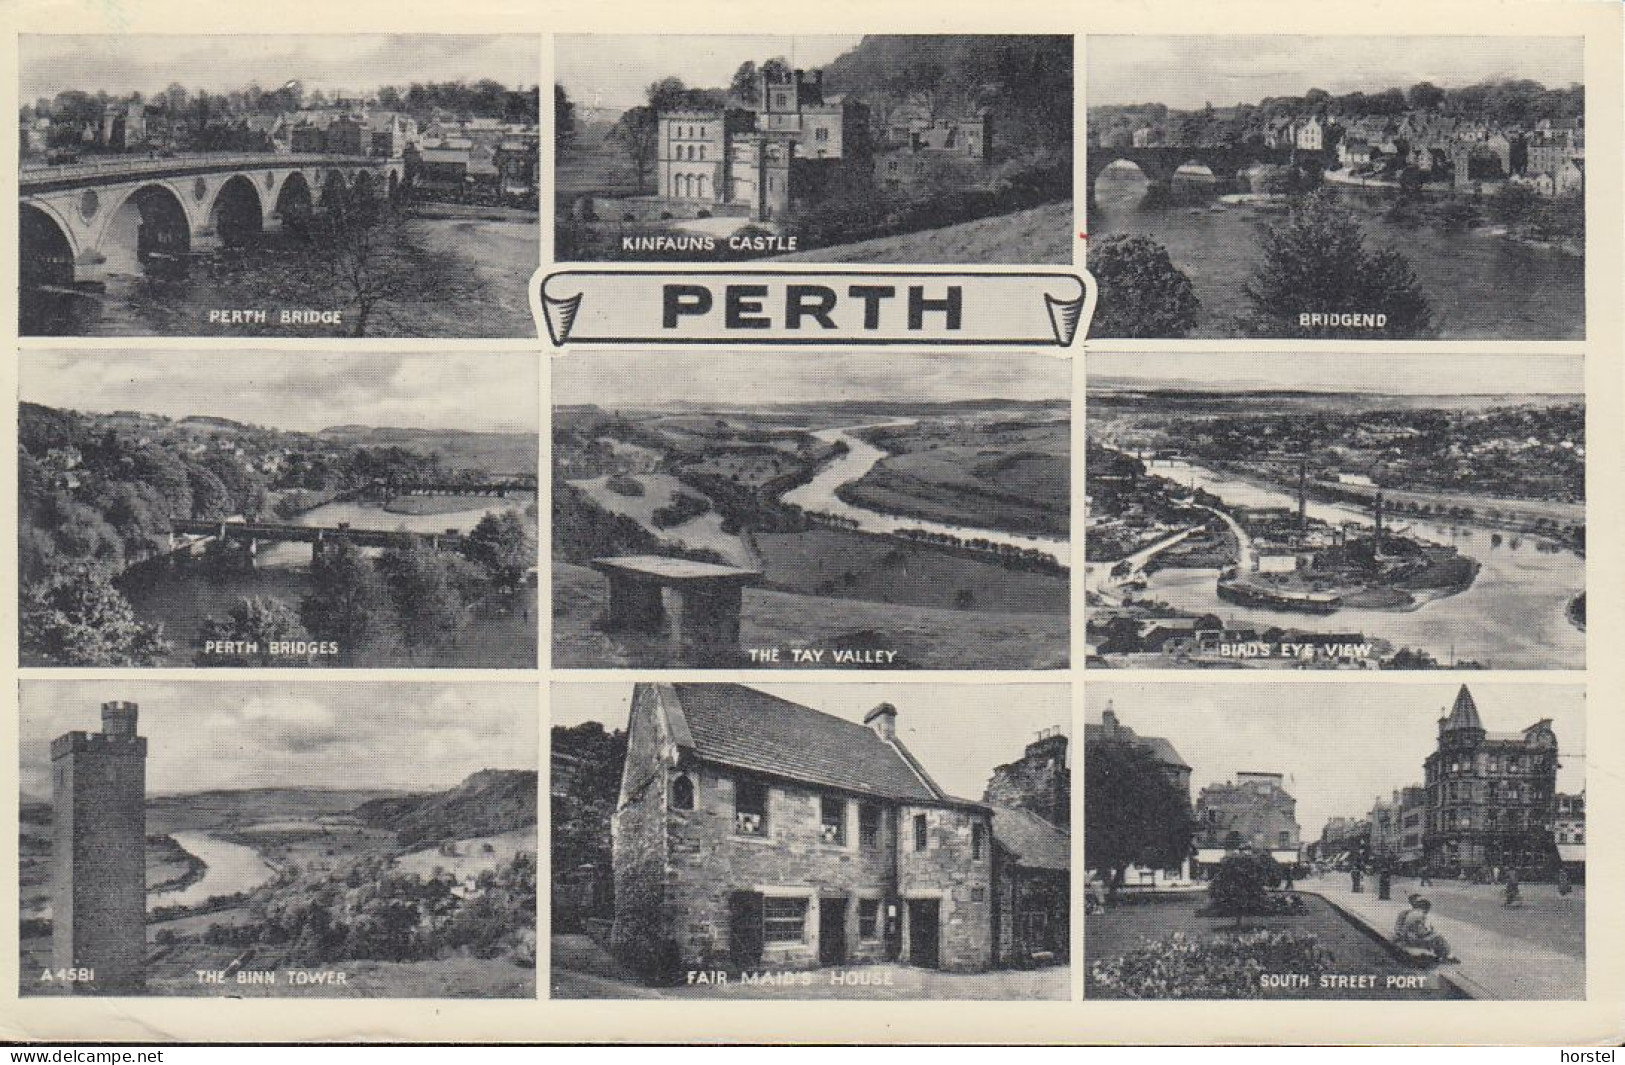 UK - Perth - Old Views - Bridge - Kinfauns Castle . Fair Maid's House - South Street Port - Perthshire